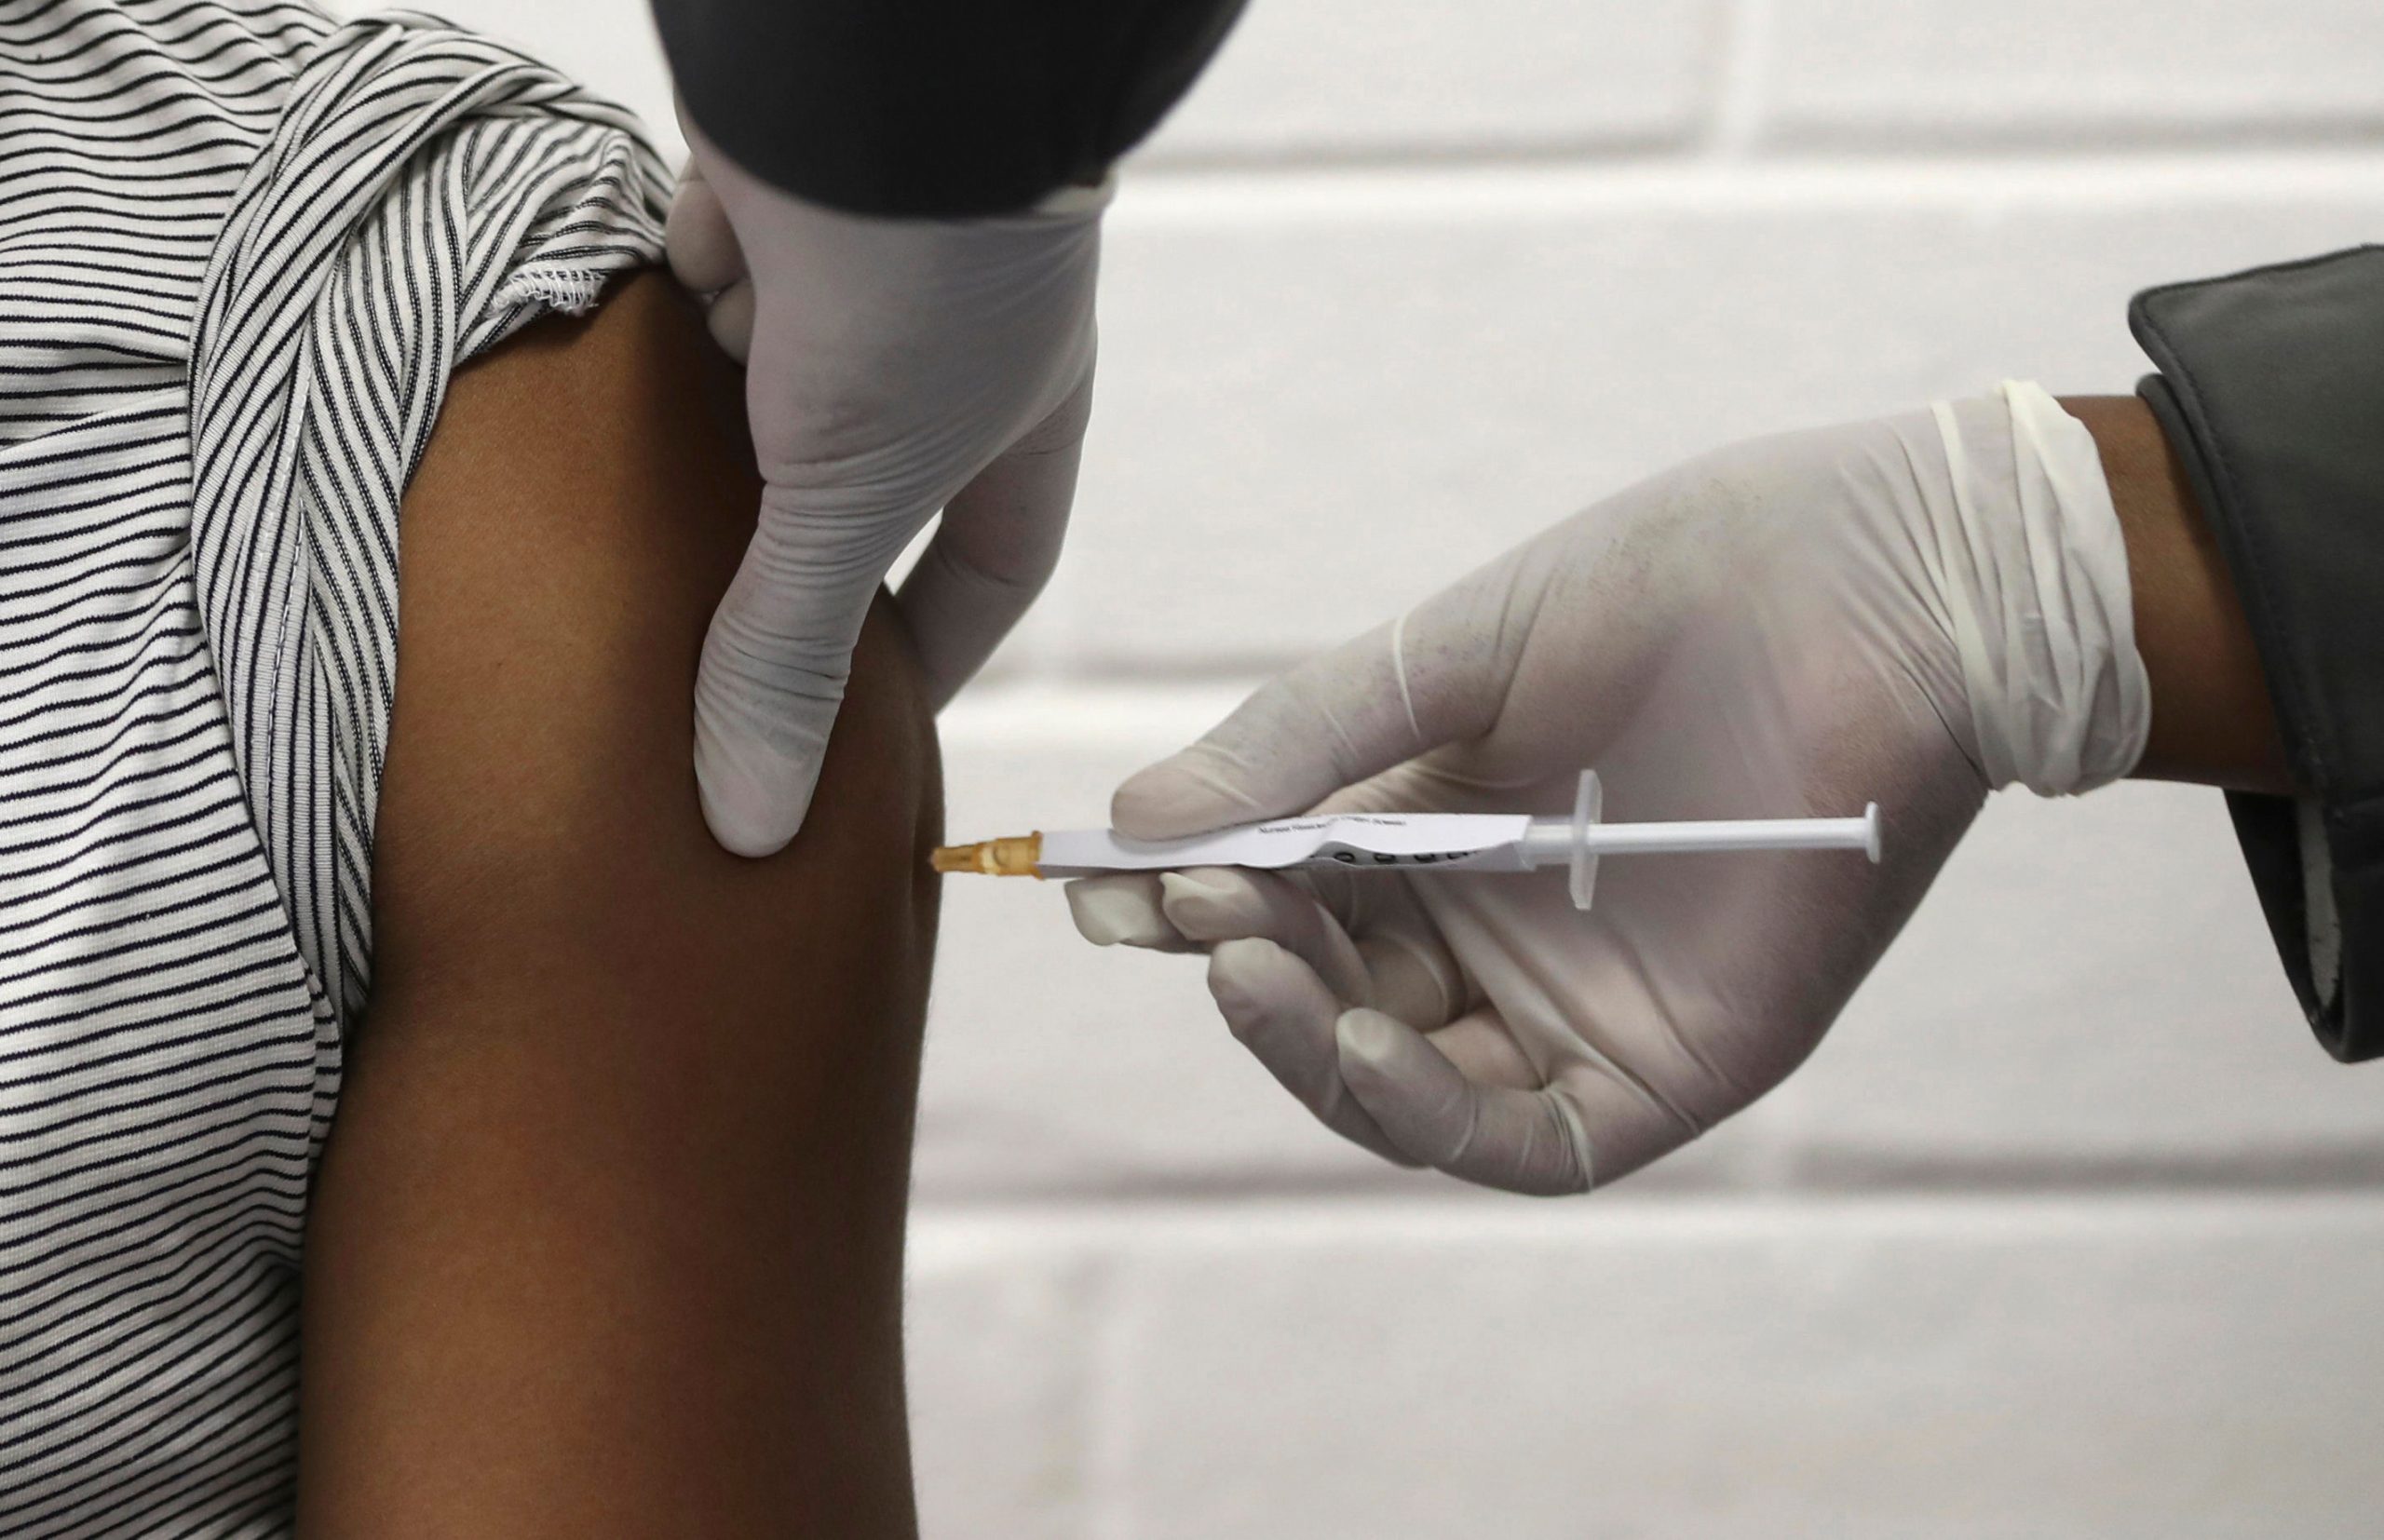 South Africa to return 1 million coronavirus vaccine doses to Serum Institute